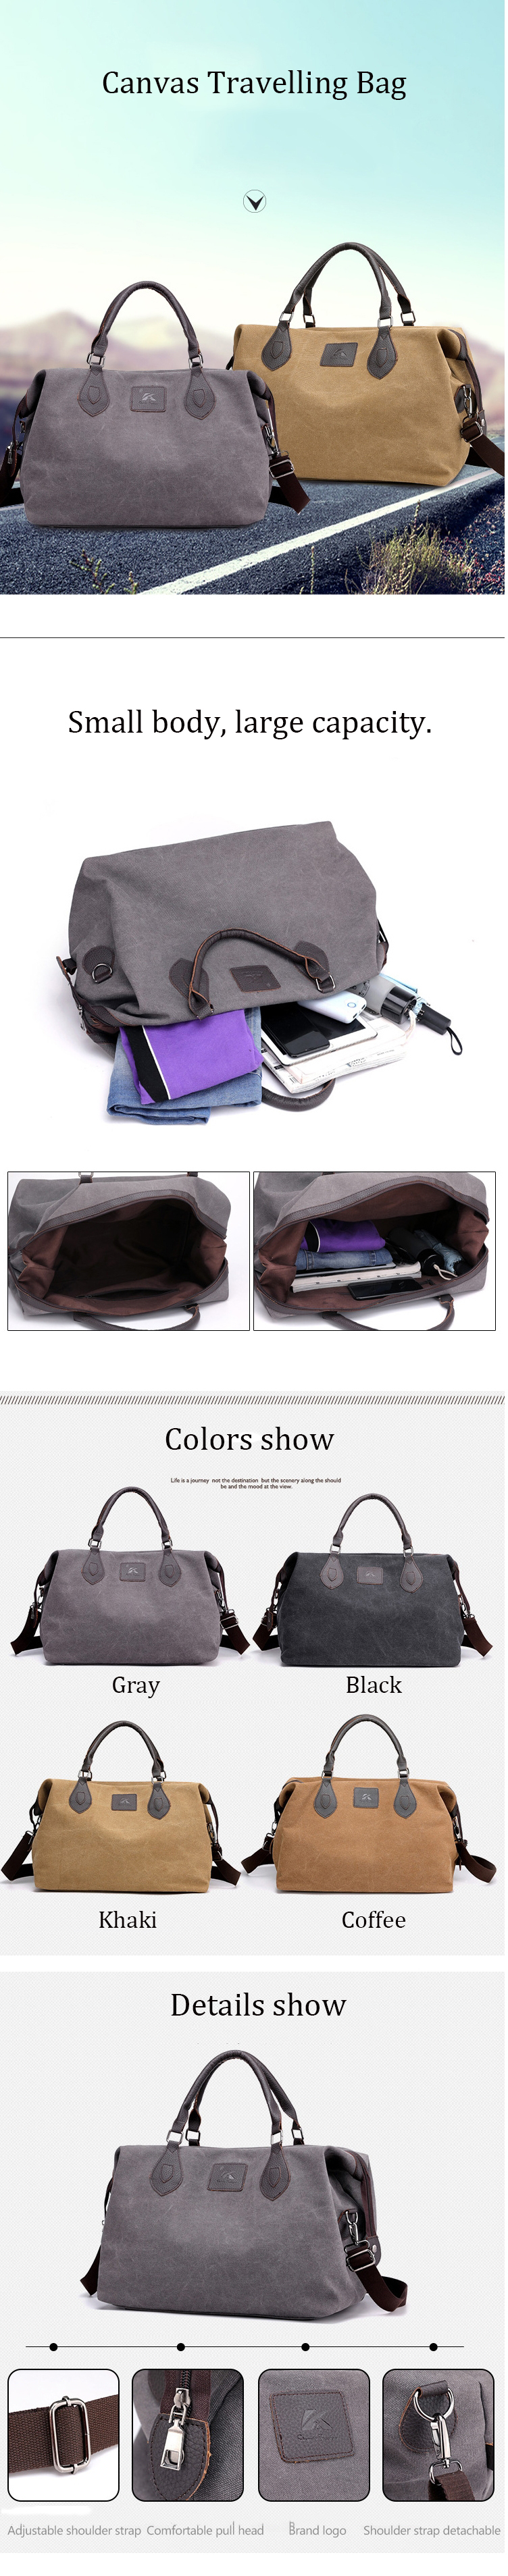 KVKY-Canvas-Travel-Bag-Outdoor-Men-Casual-Fashion-Handbag-Large-Capacity-Multifunctional-Bag-1556965-1